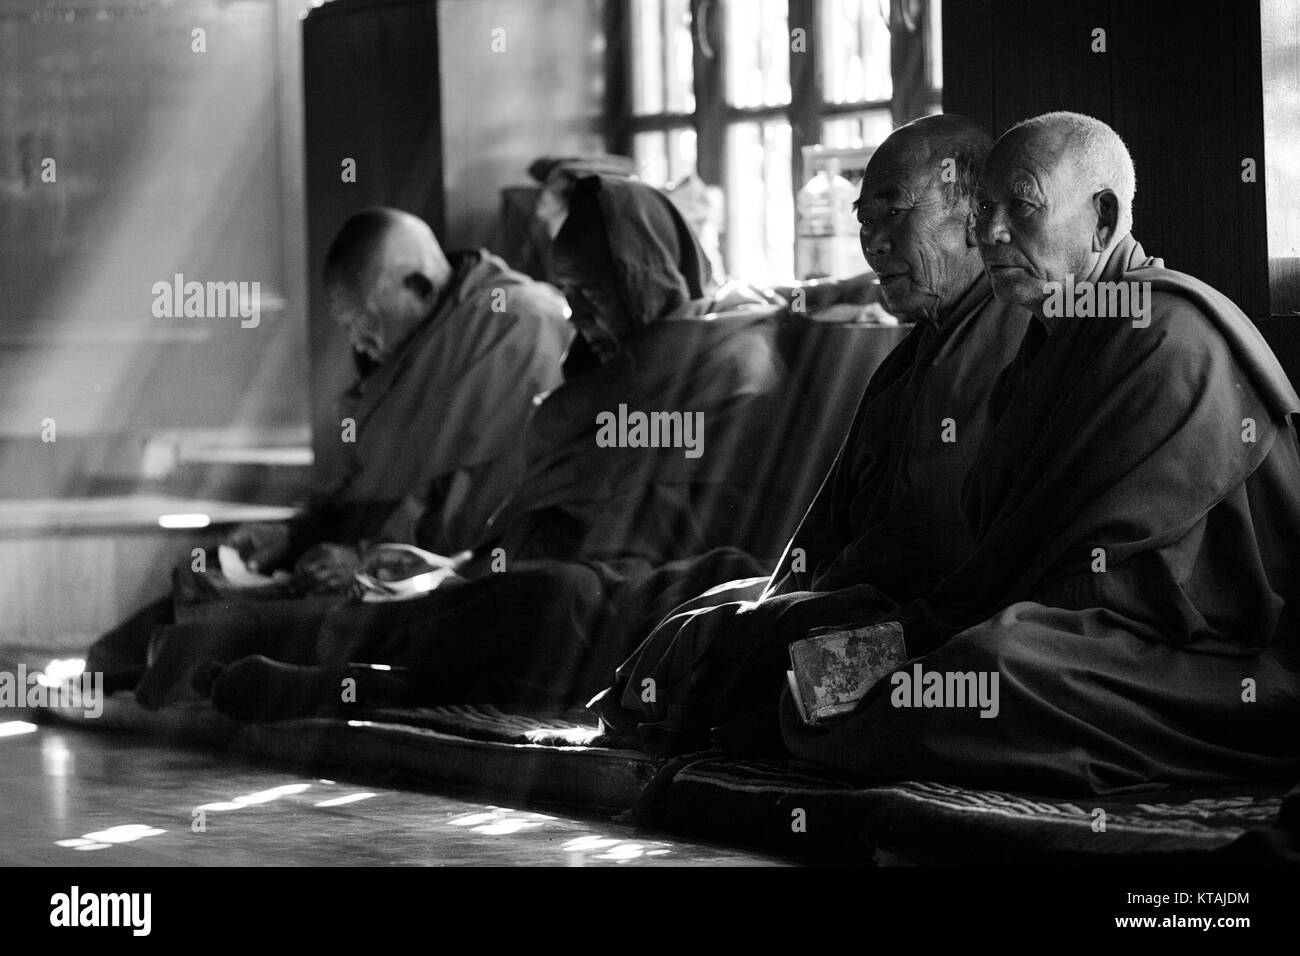 Buddhist monks sitting at the window and praying on festival day, Diskit Monastery, Nubra Valley, Ladakh, Jammu and Kashmir, India. Black and white Stock Photo